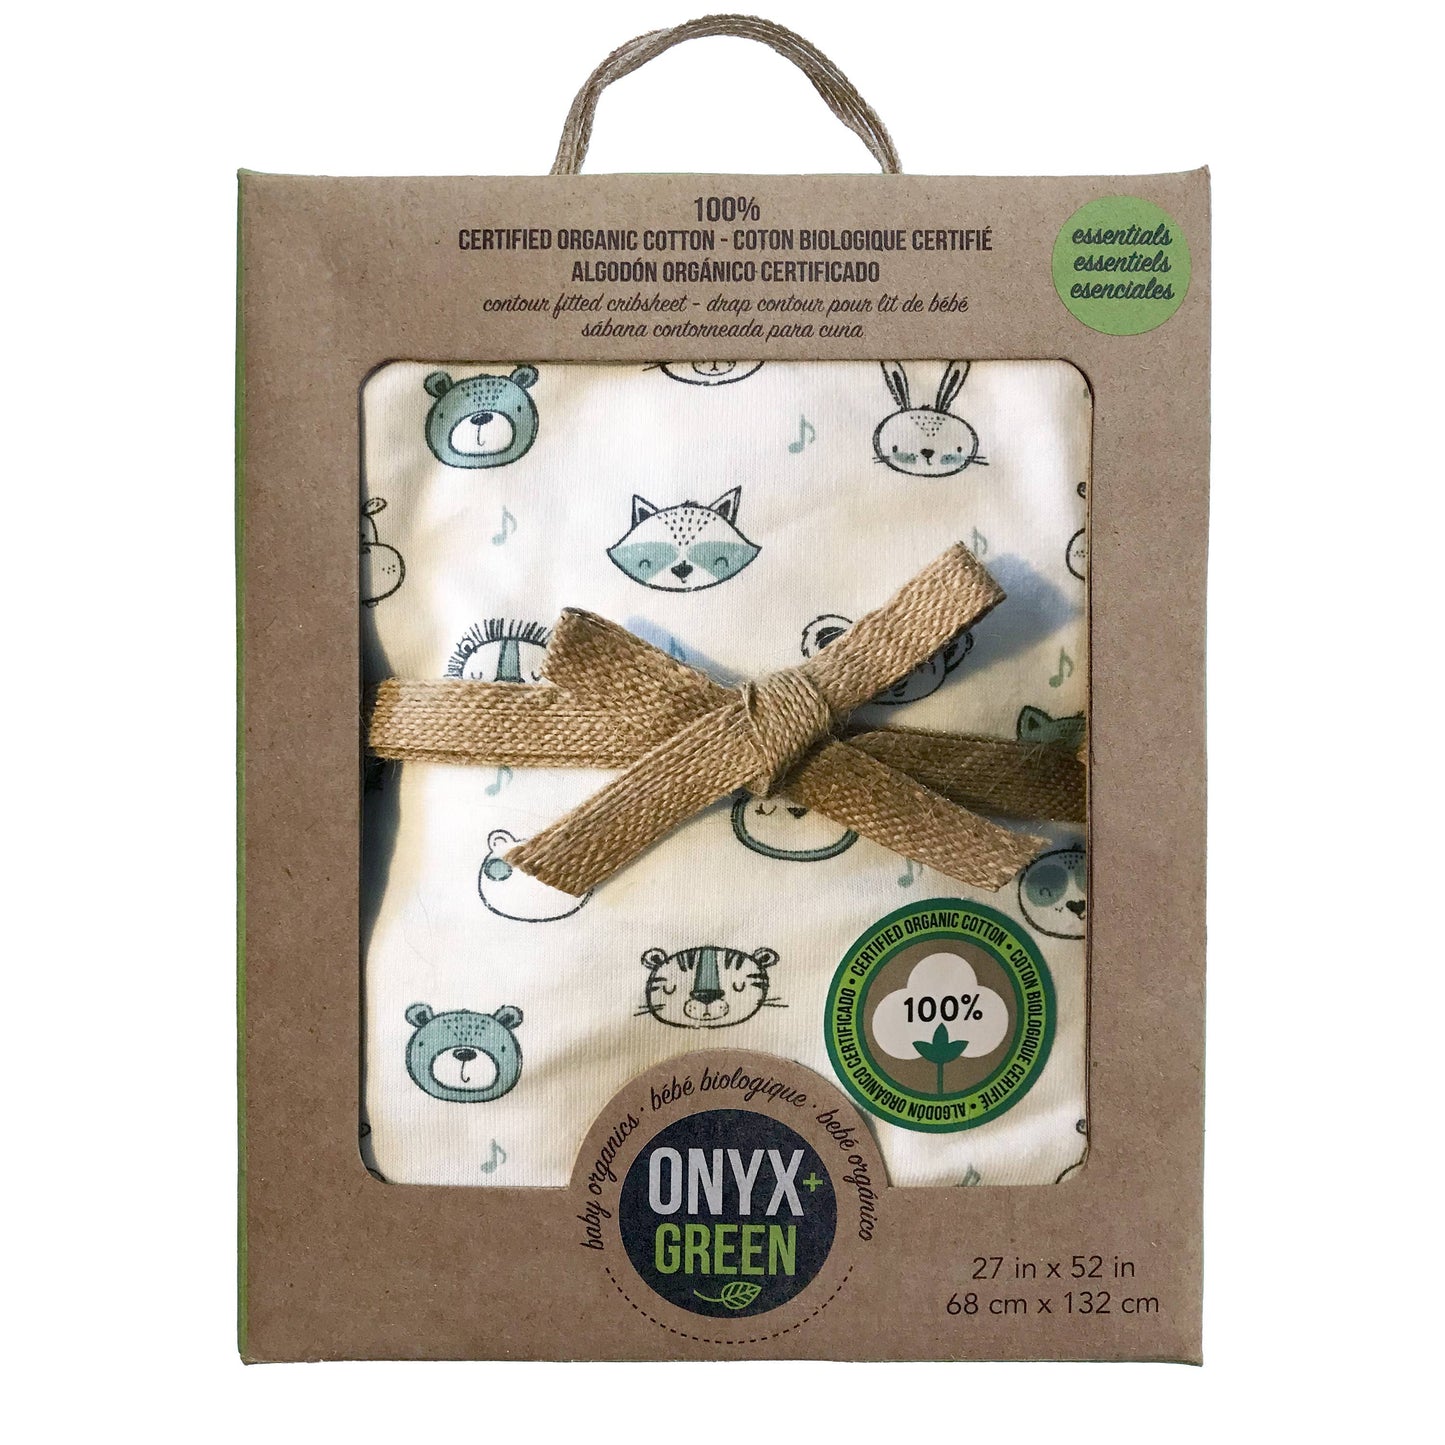 ONYX AND GREEN BABY ORGANICS - crib sheet, 100% certified organic cotton, 3 prints